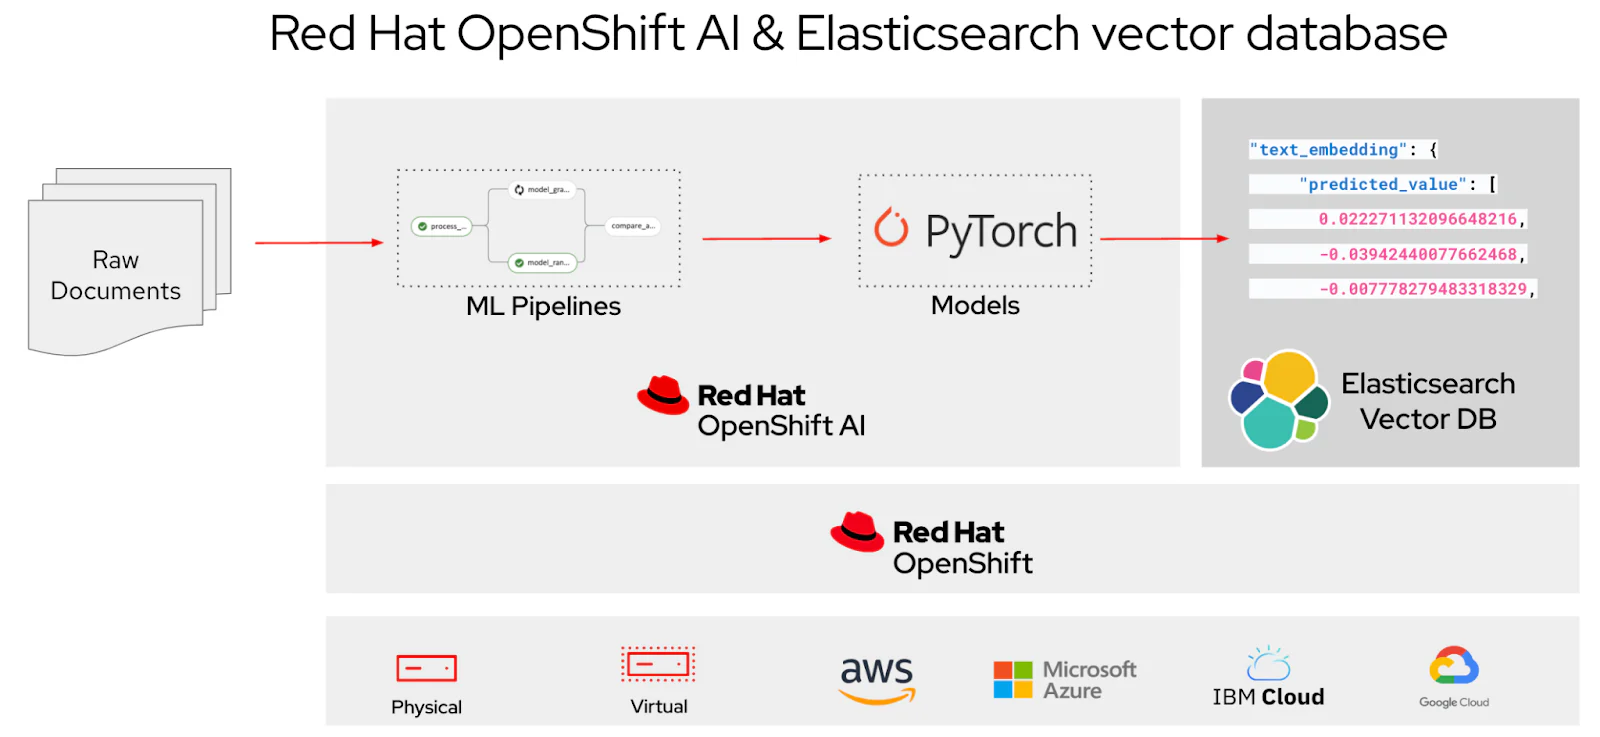 红帽为 Red Hat OpenShift AI 扩大与 Elasticsearch 向量数据库的合作